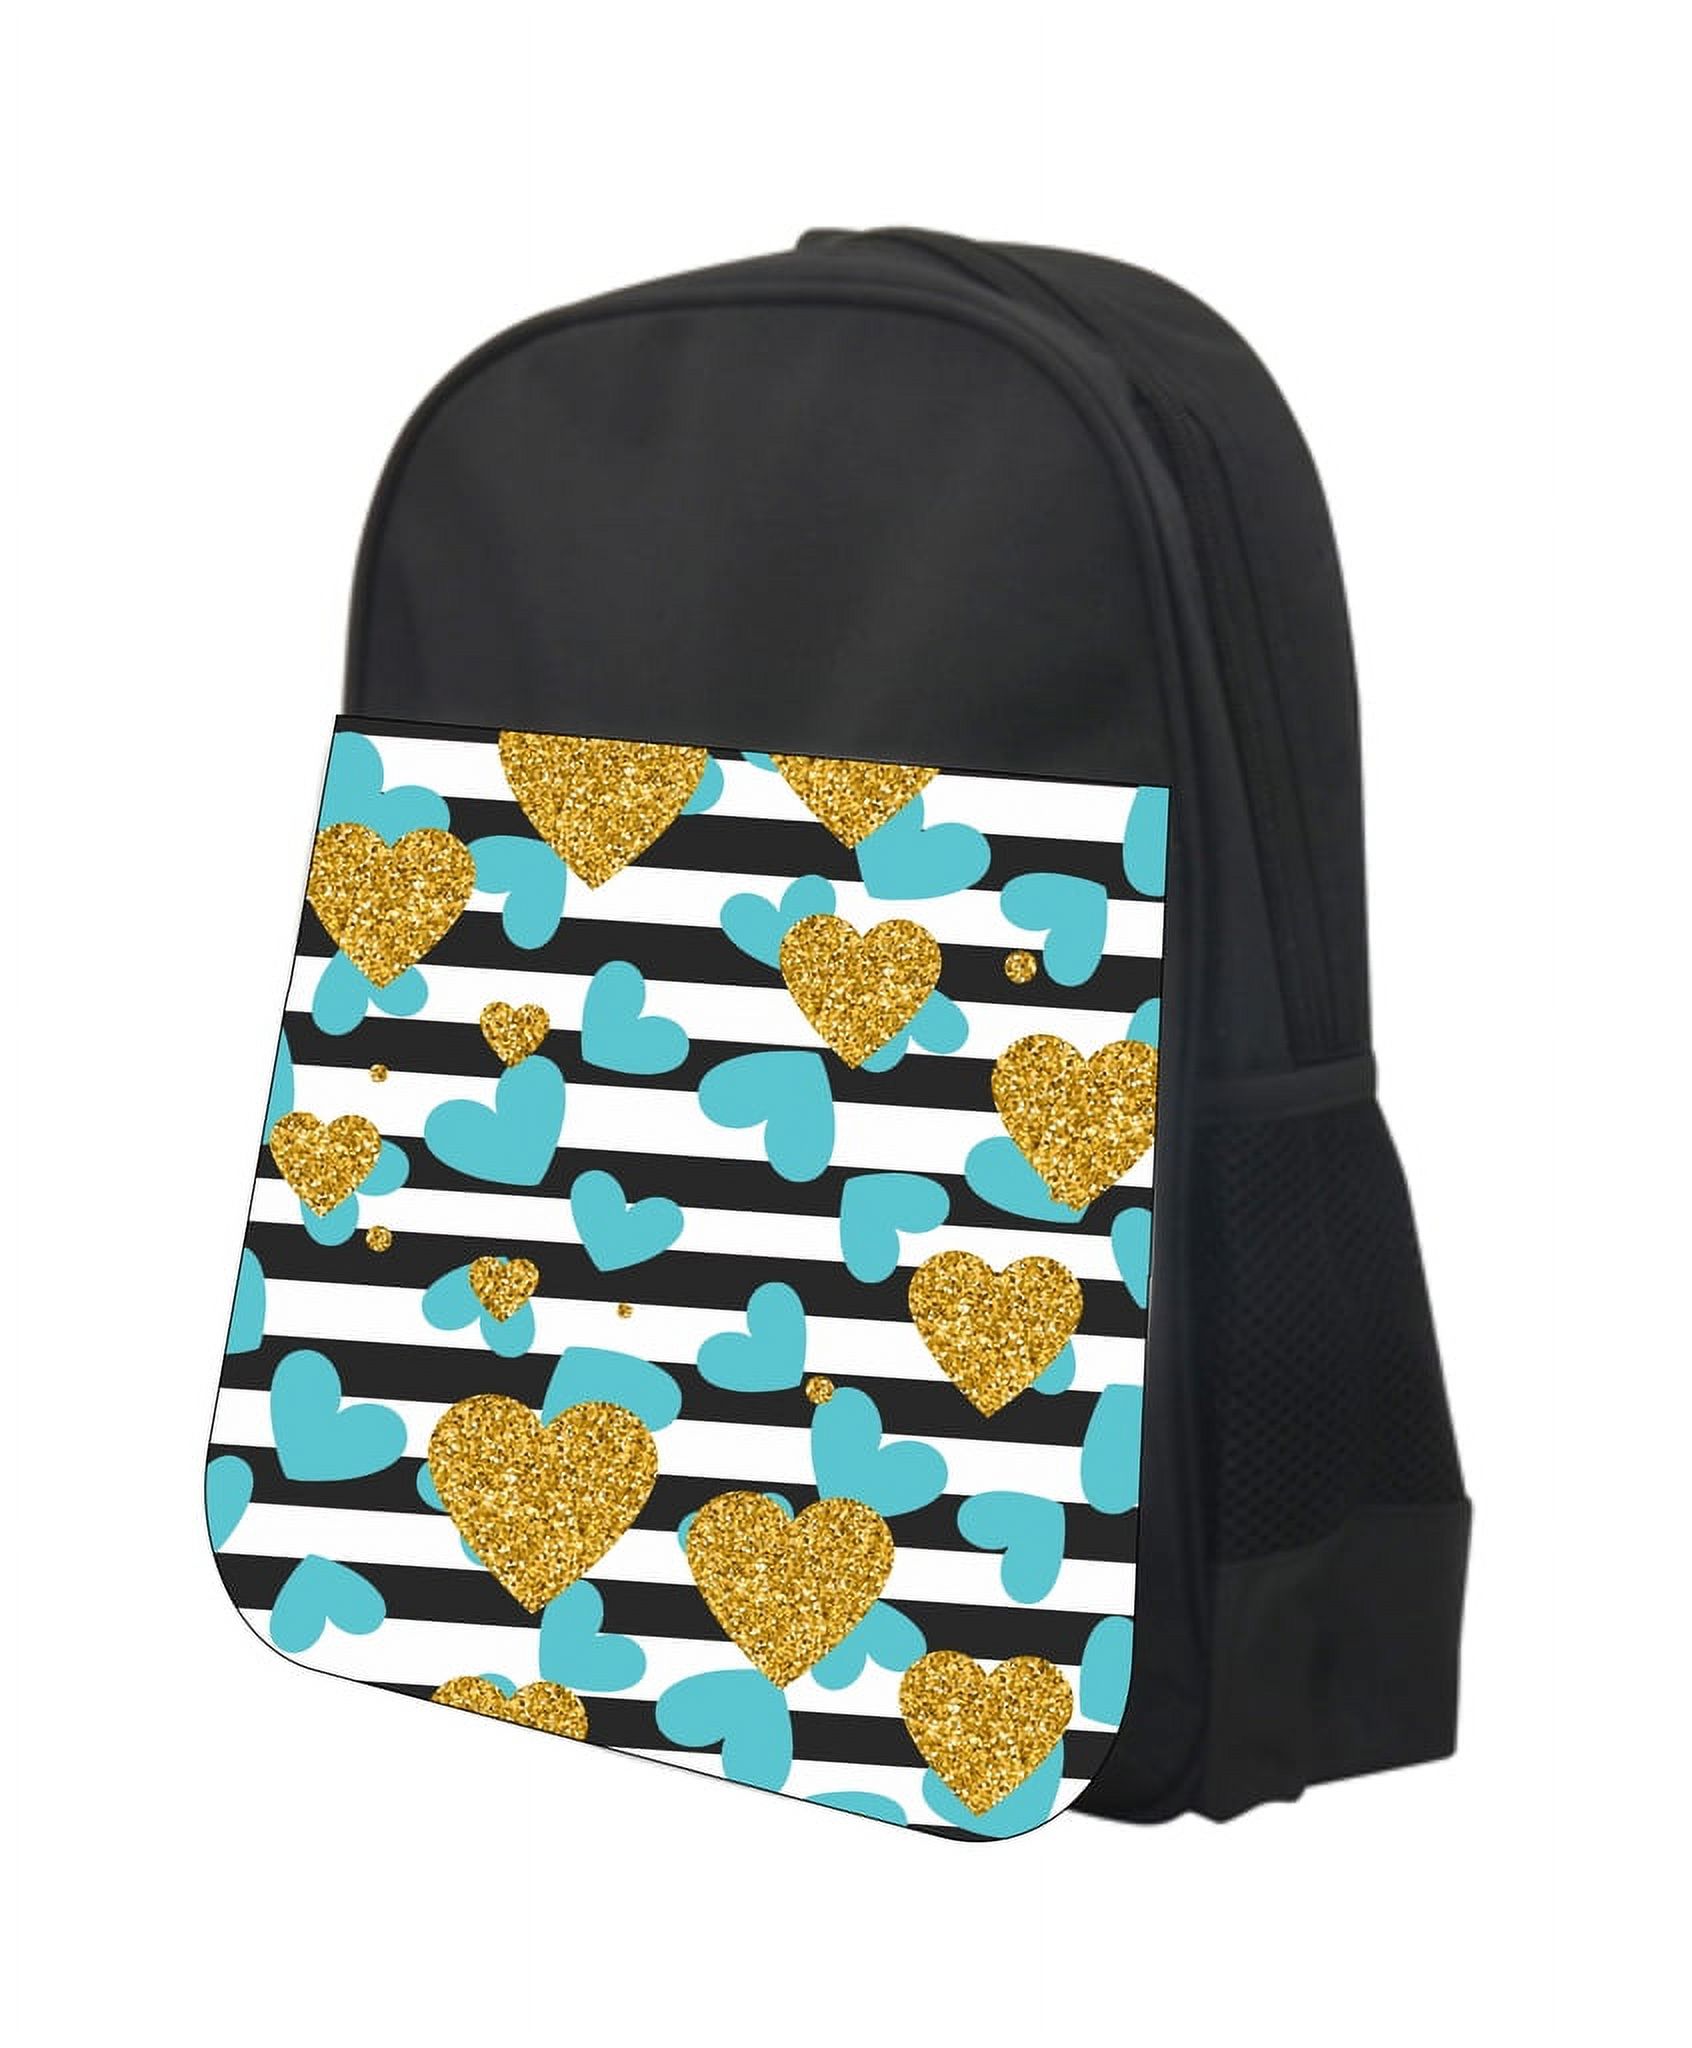 Glitter Print Hearts And Stripes 13" x 10" Black Preschool Toddler Children's Backpack - image 1 of 2